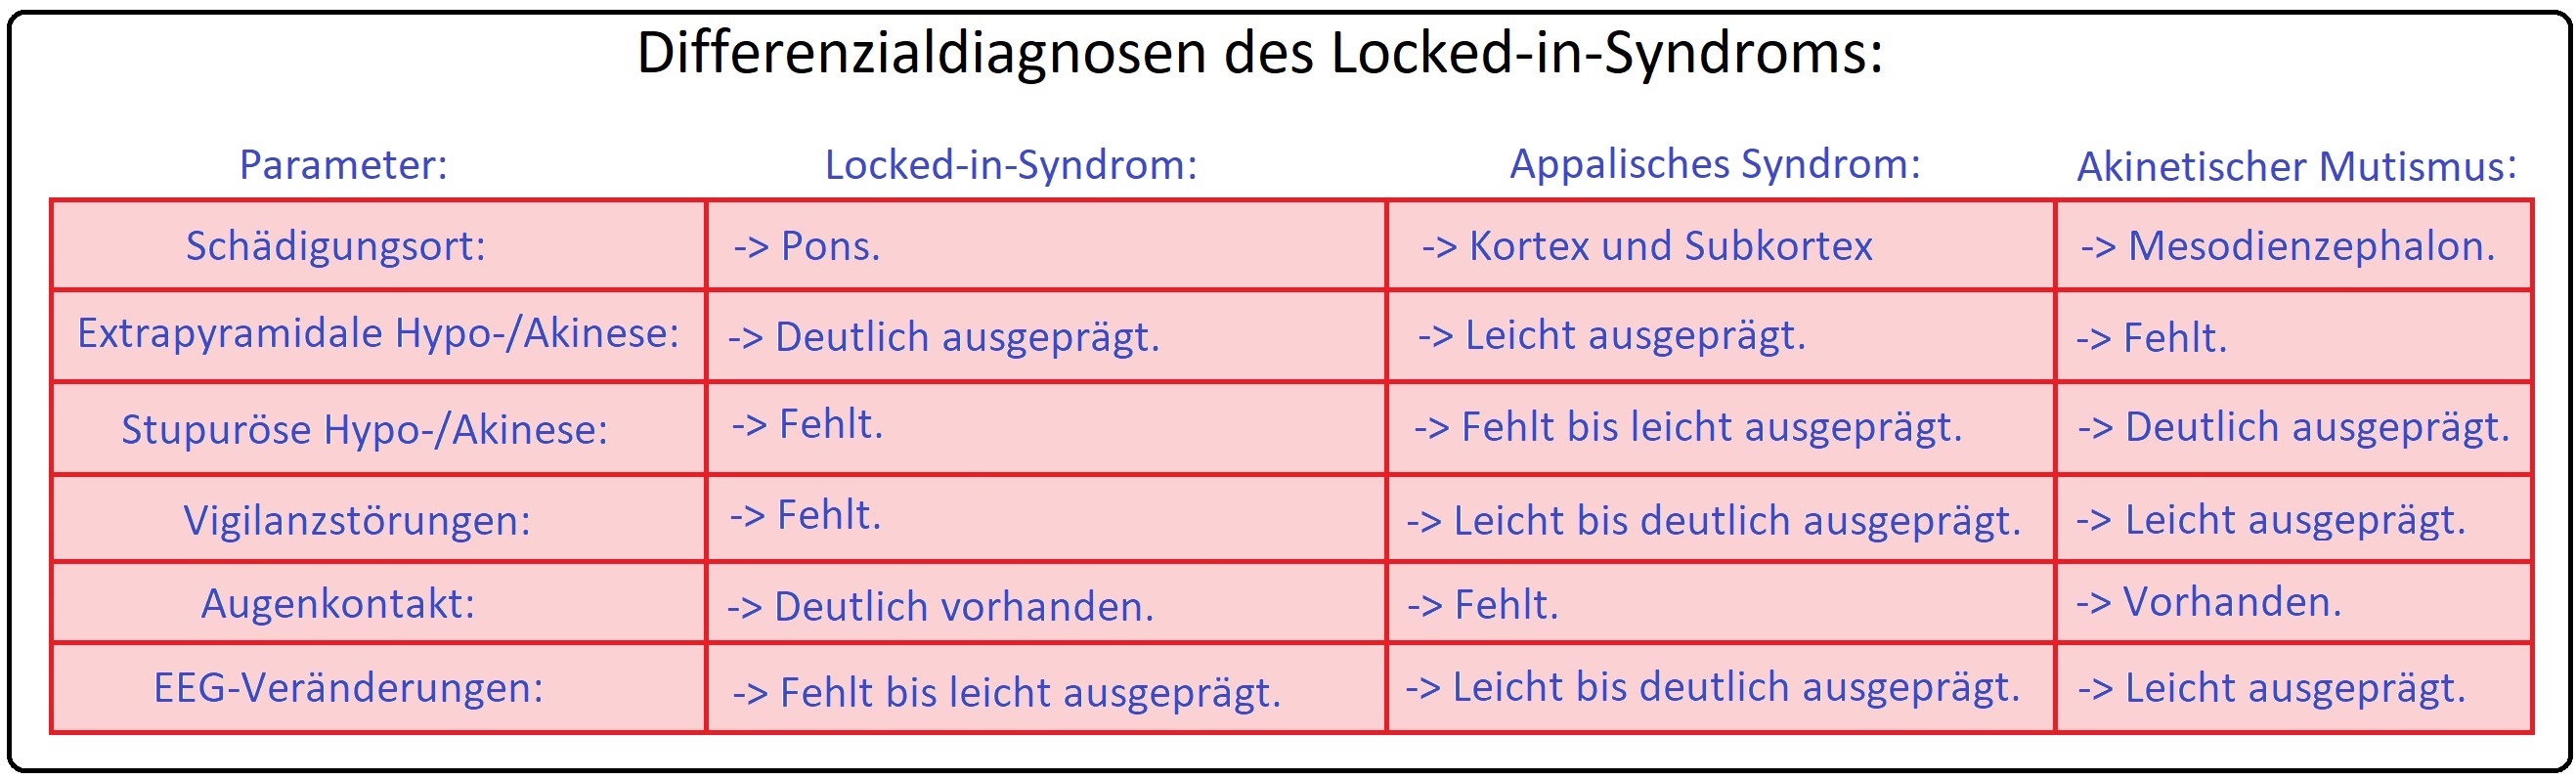 014 Differenzialdiagnosen des Locked in Syndroms